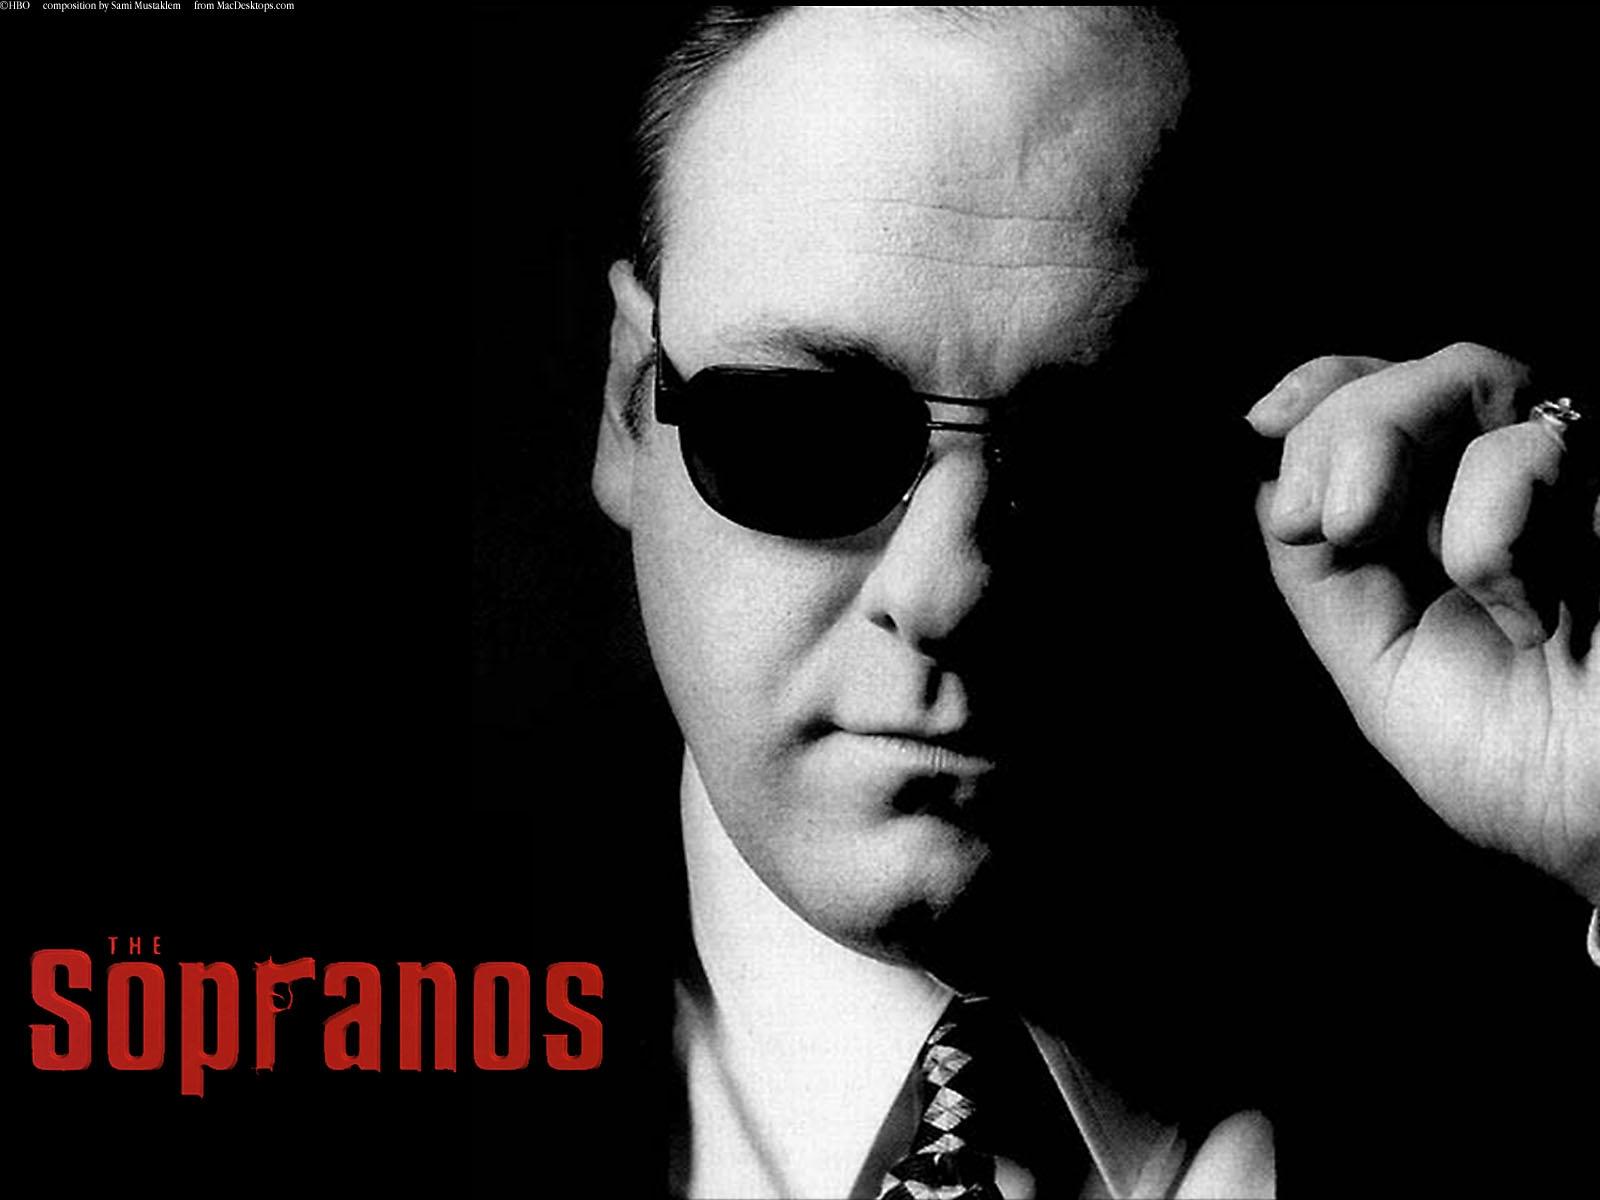 The Sopranos Poster